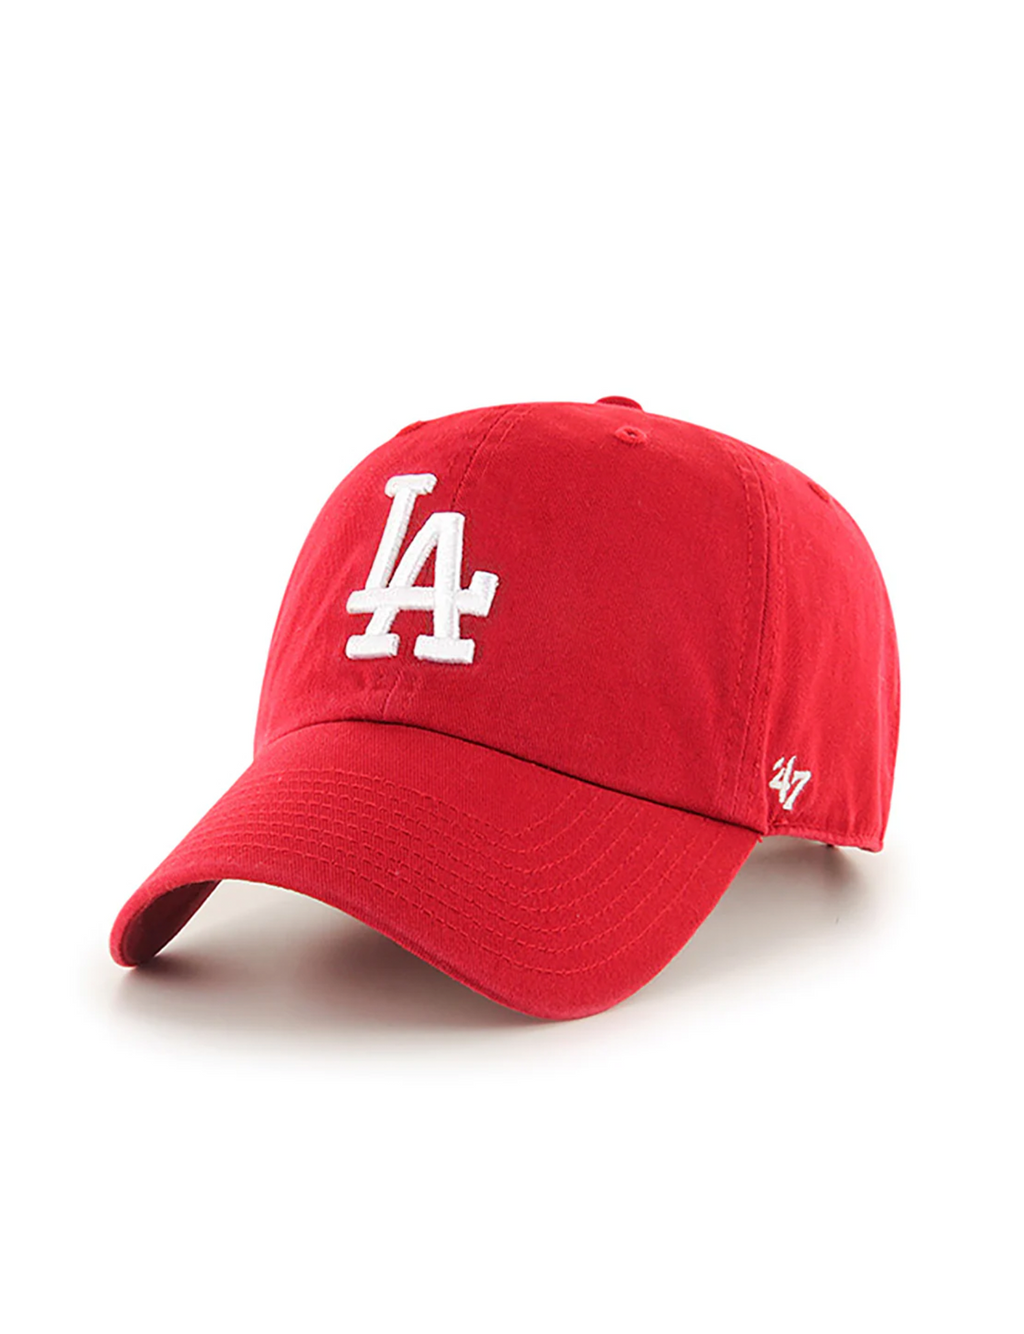 LA Dodgers MVP Ball Cap, Red/White